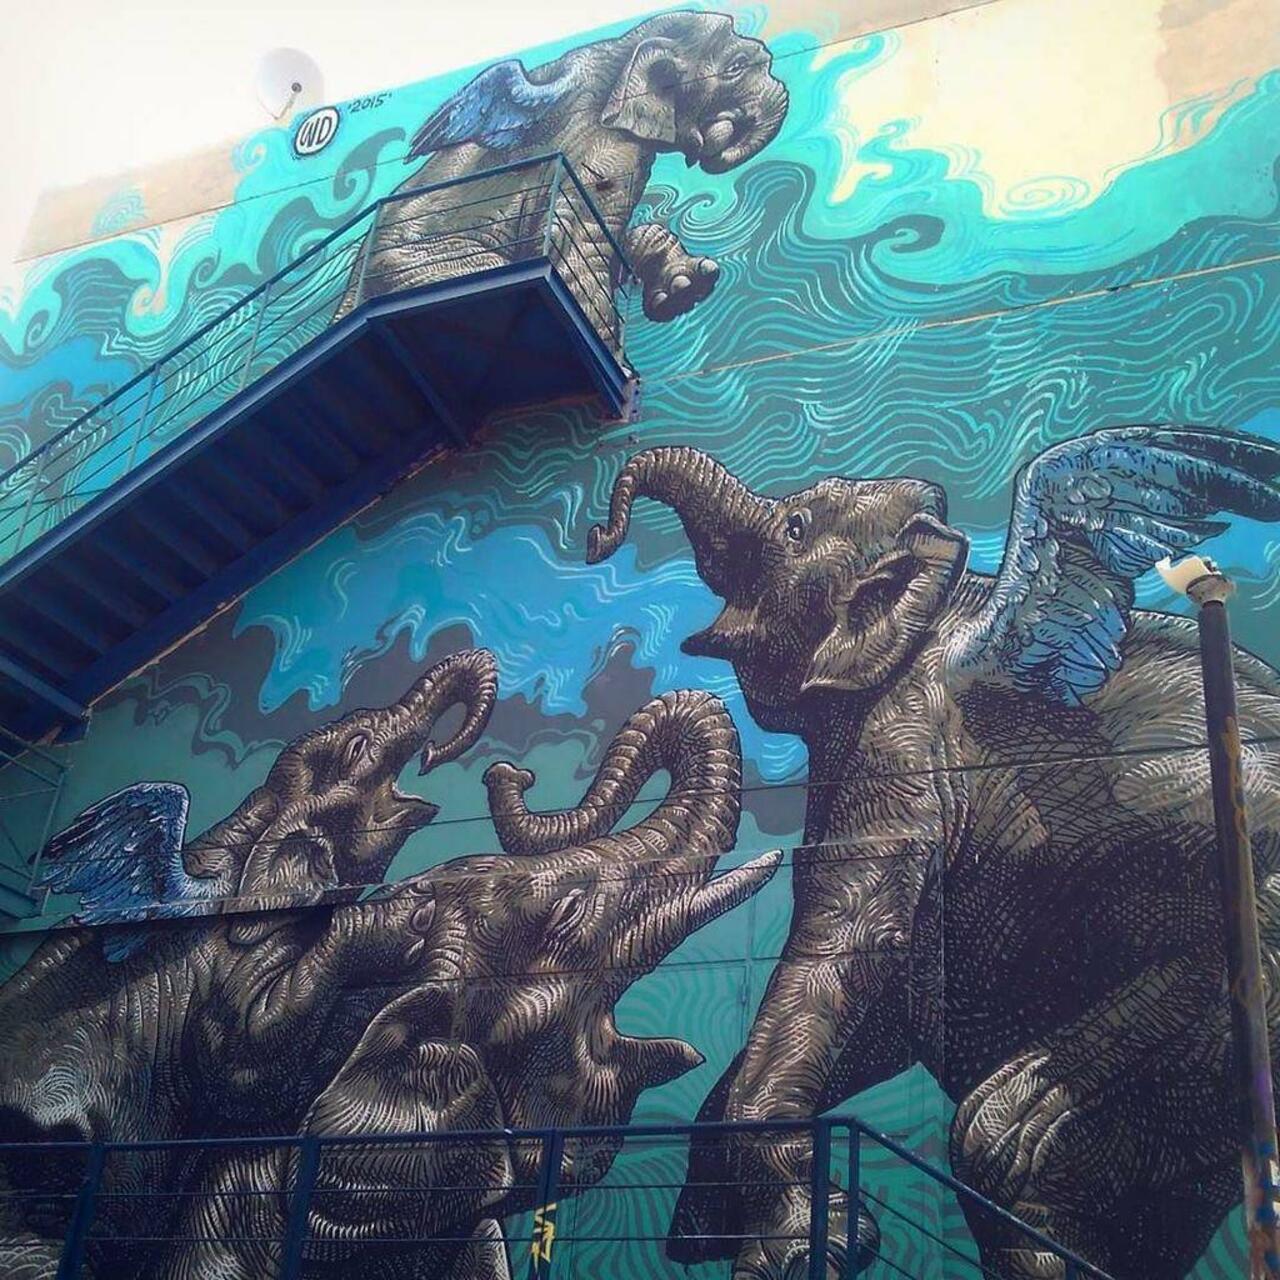 my #athens 
#elephants #flying #graffiti #ntua #stairs #wall #mural by pensiero_st http://ift.tt/1i9Bnhm http://t.co/luCNSx3R62